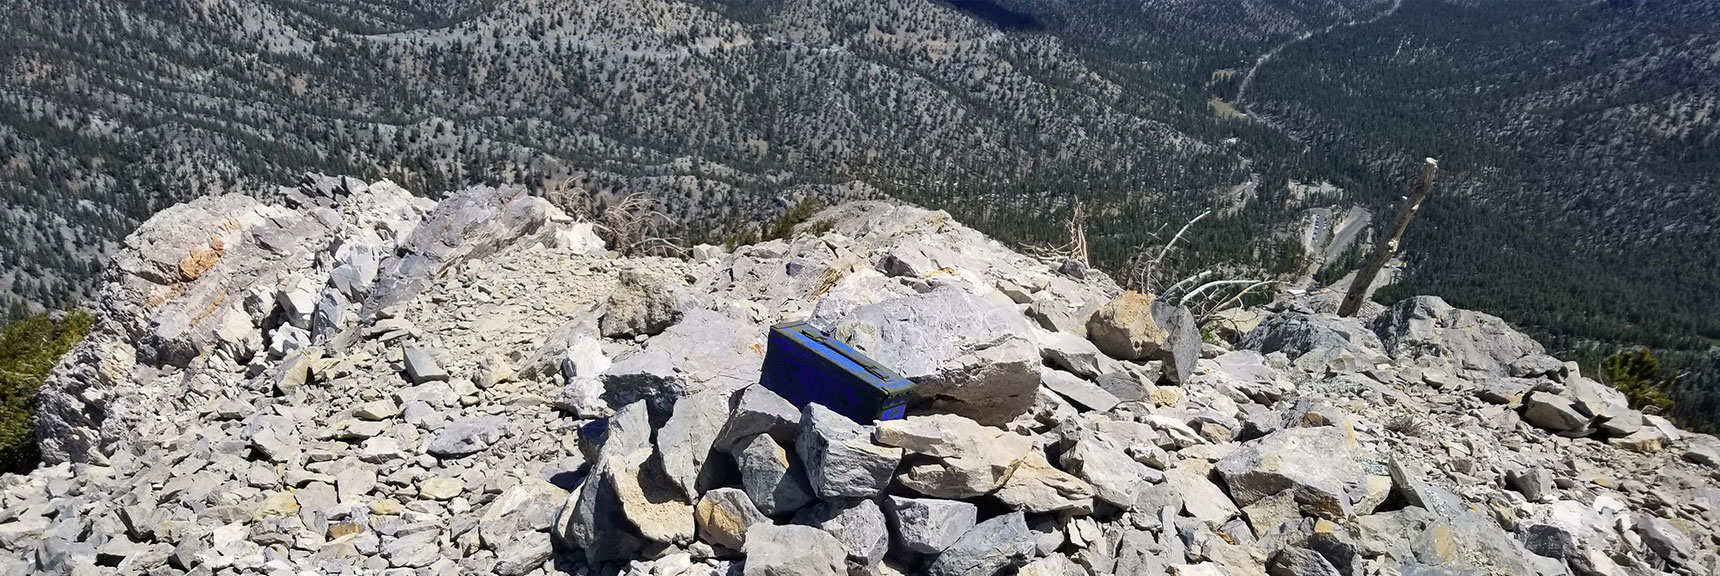 Summit Box on Lee Peak in Kyle Canyon, Spring Mountains, Nevada Slide 001